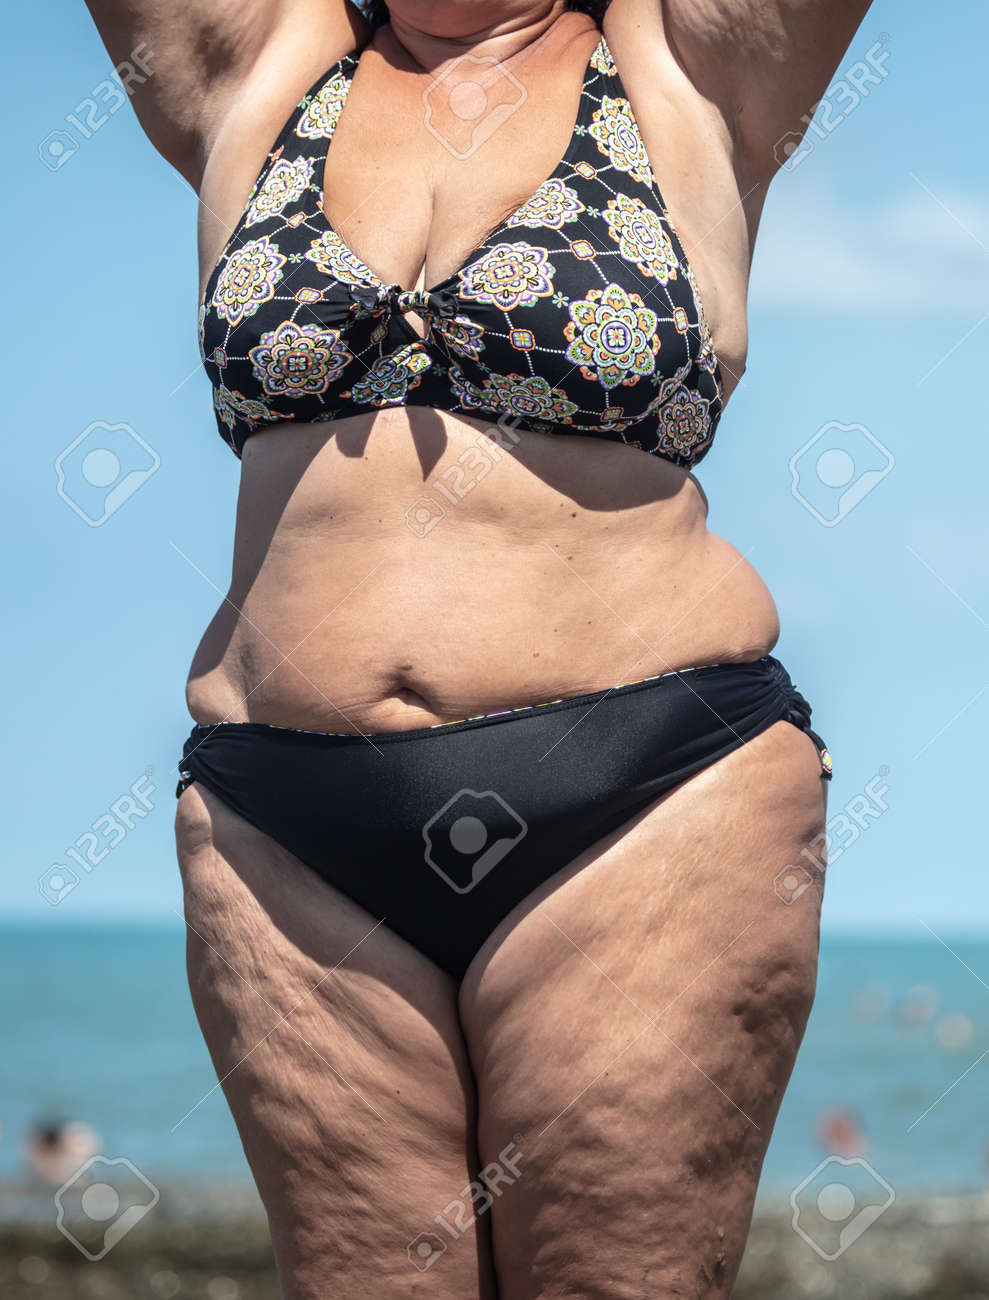 danial niazi recommends fat lady in bikini pic